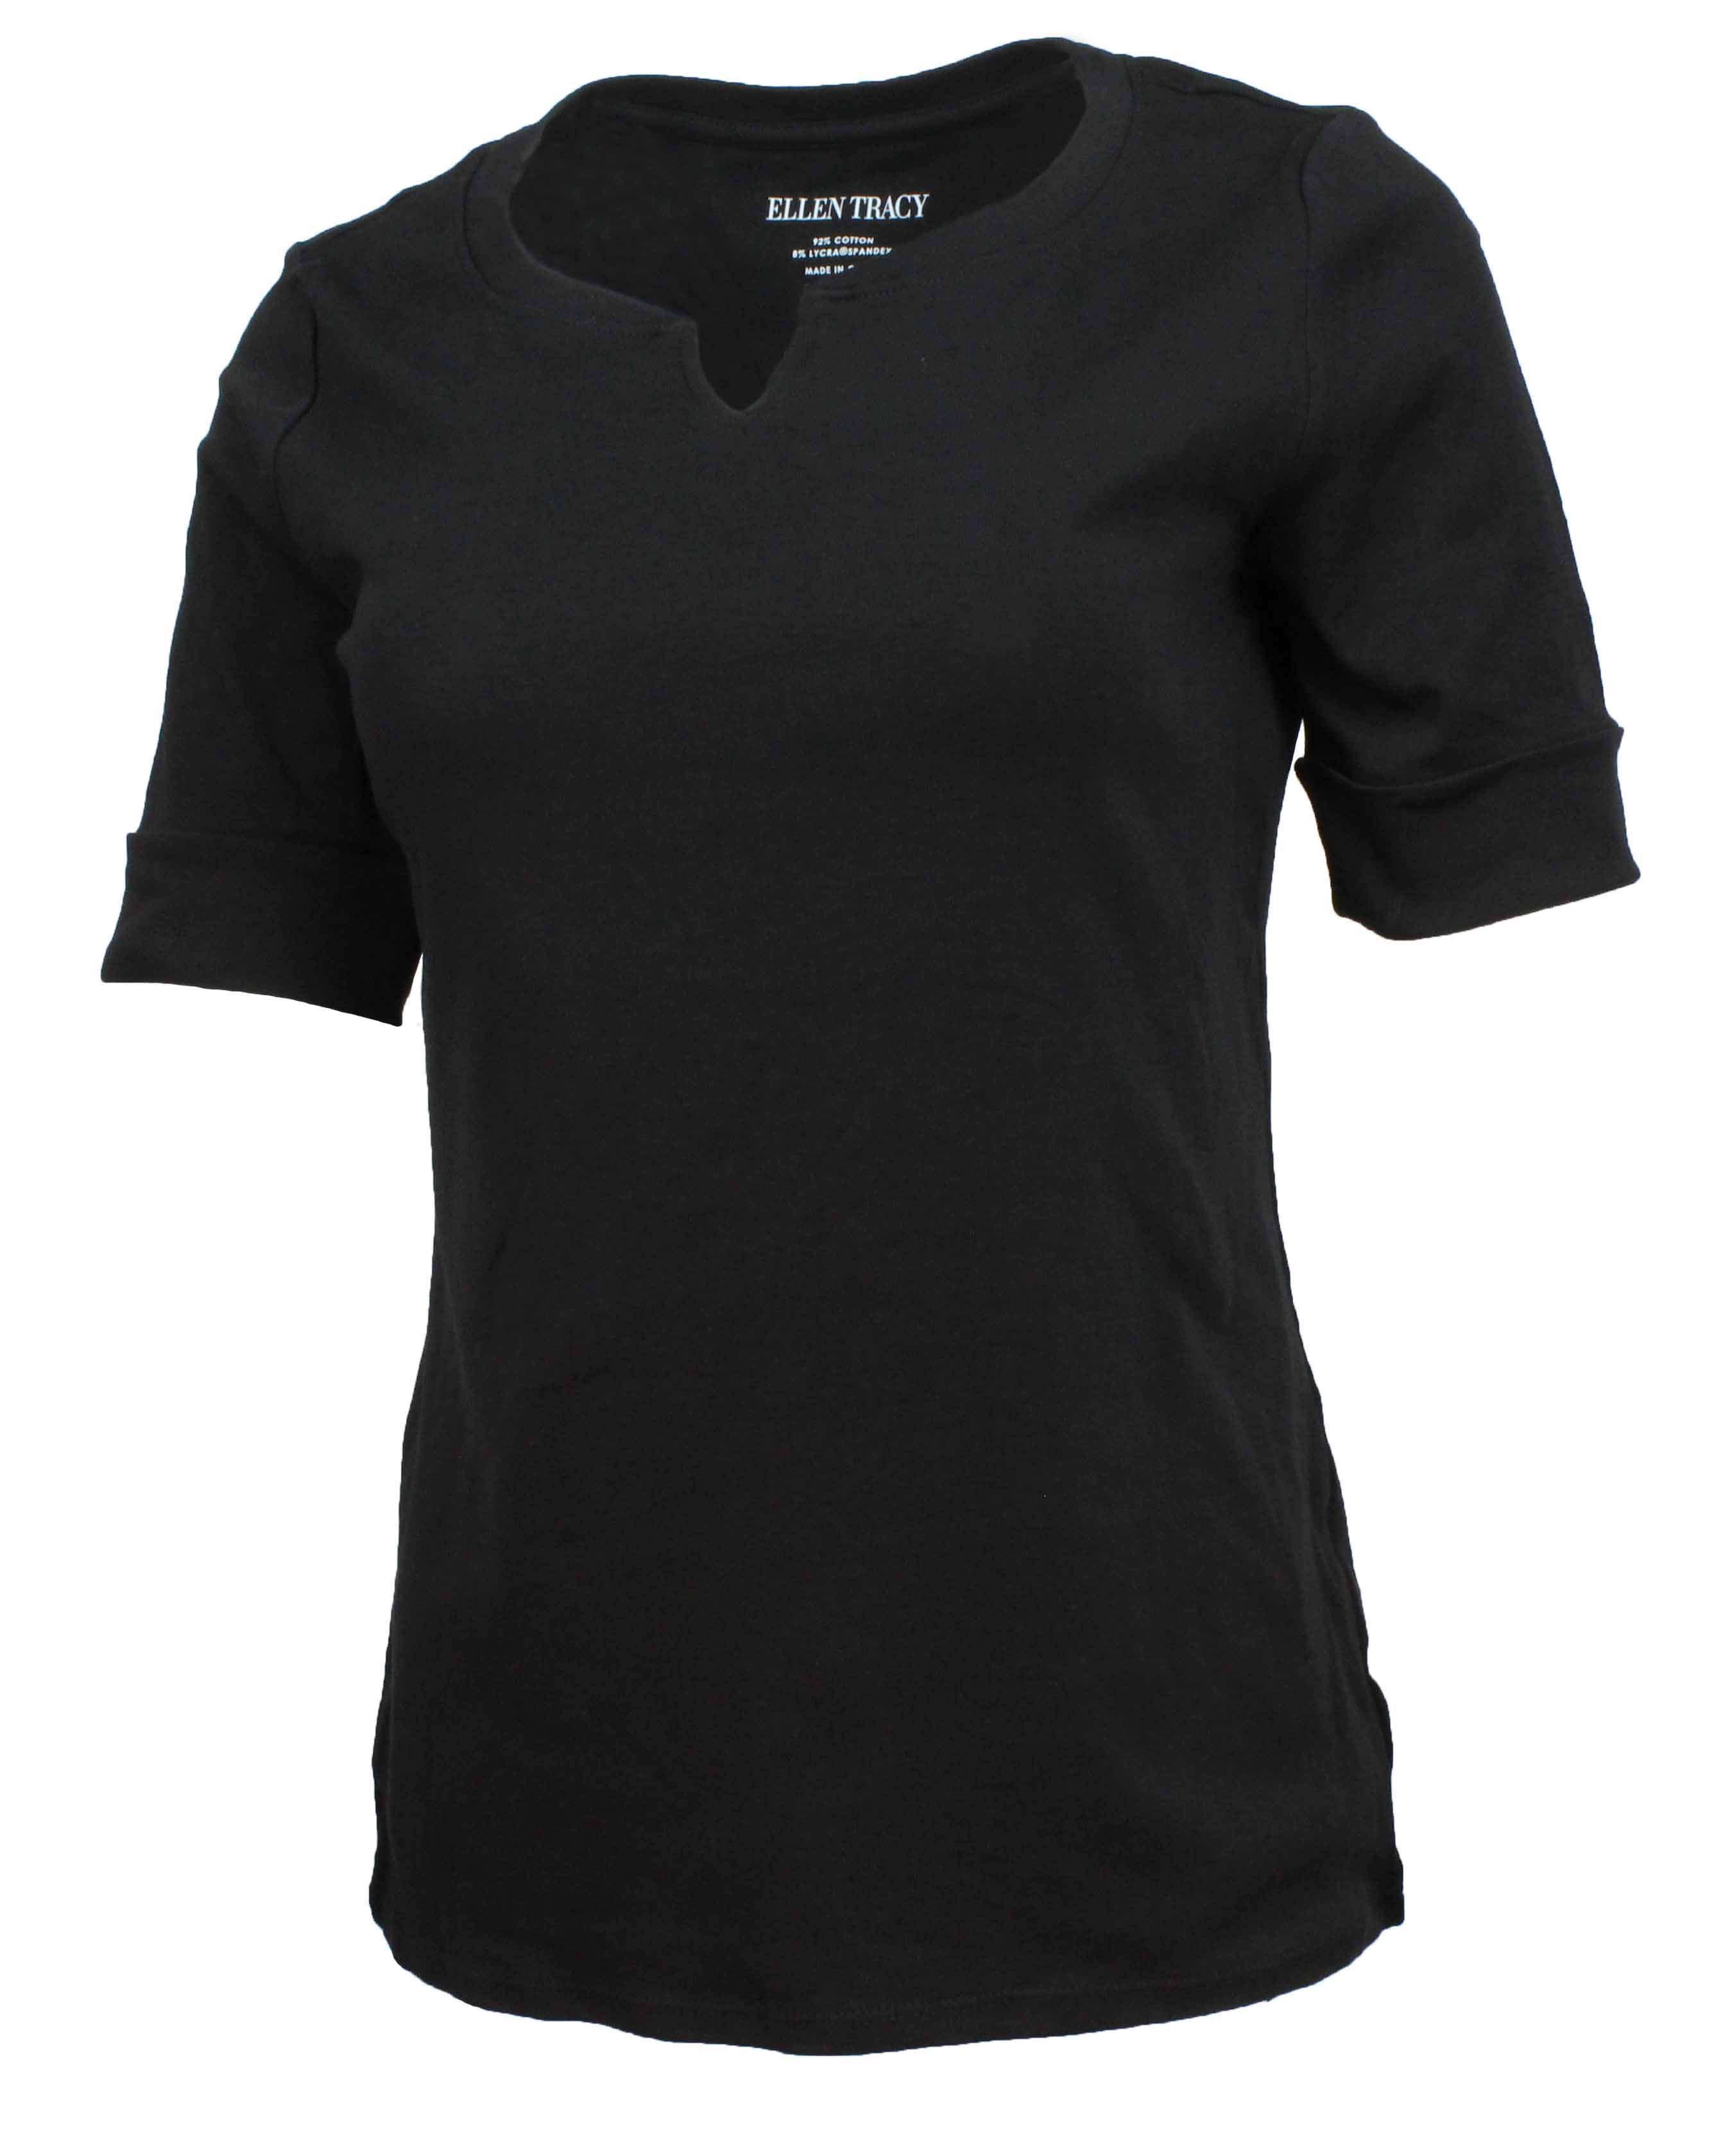 Ellen Tracy Womens V-Neck Elbow Sleeve Top (Black, Small) - Walmart.com